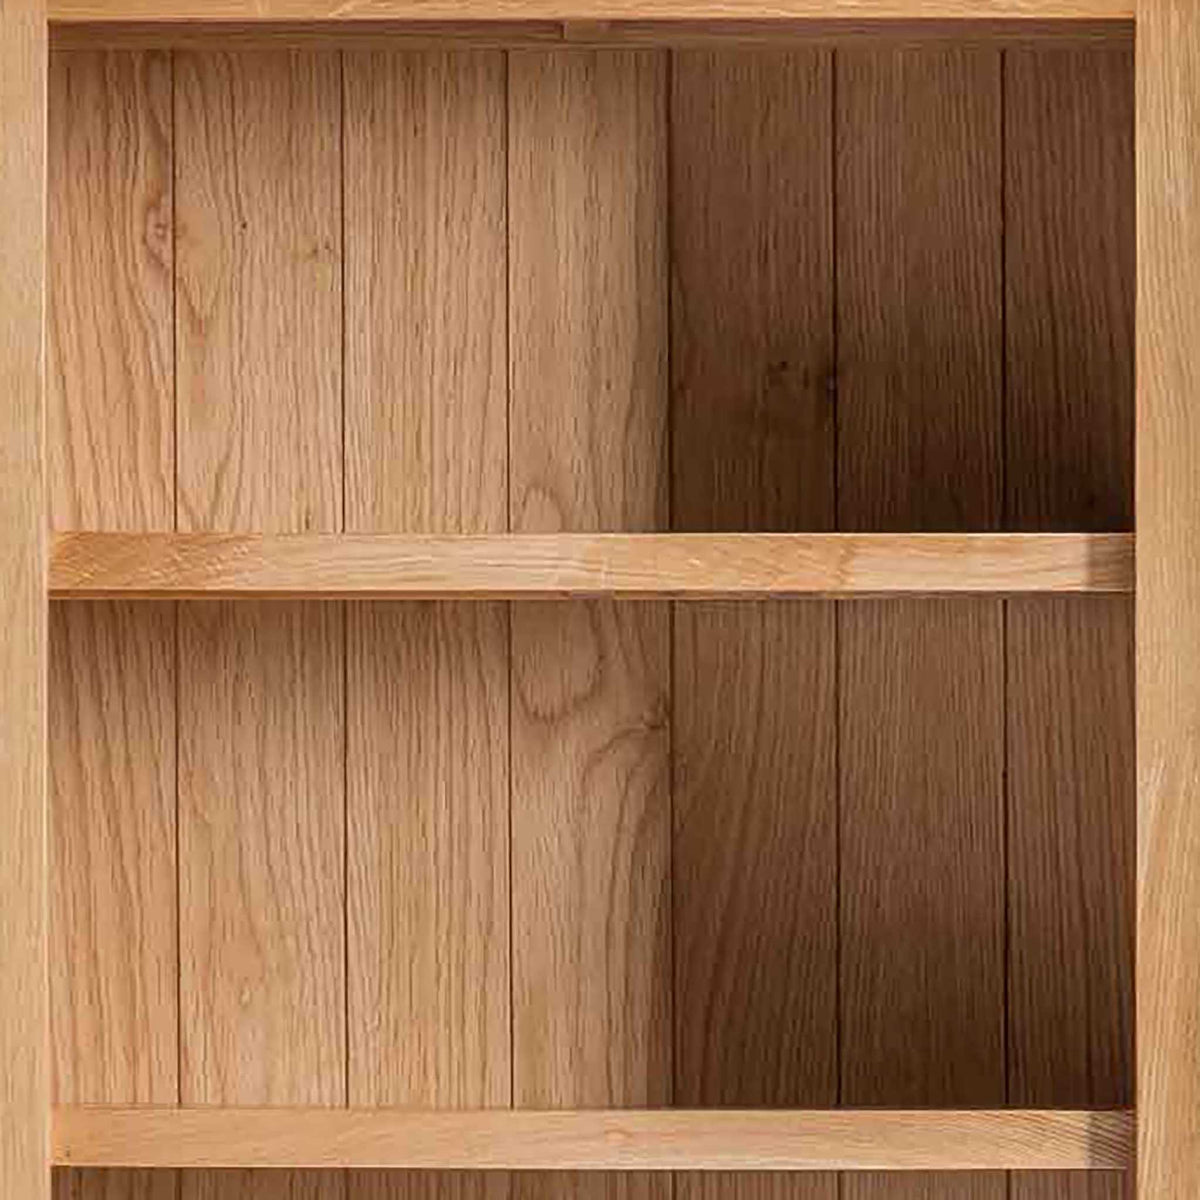 London Oak Slim Bookcase - Close up of shelves and back panelling